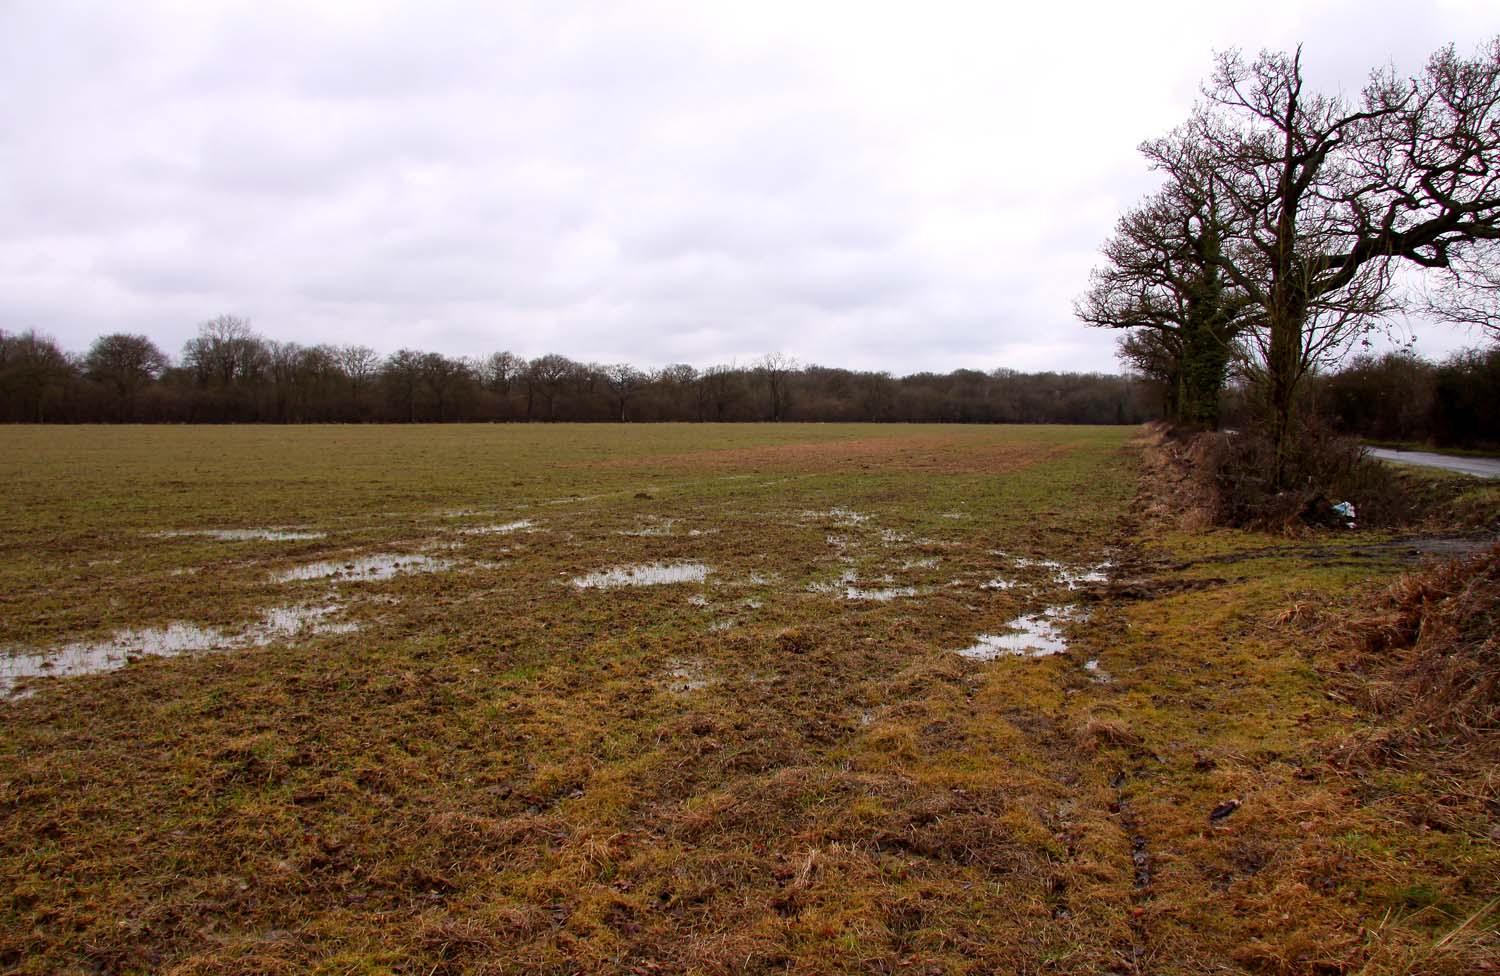 Muddy Field #2